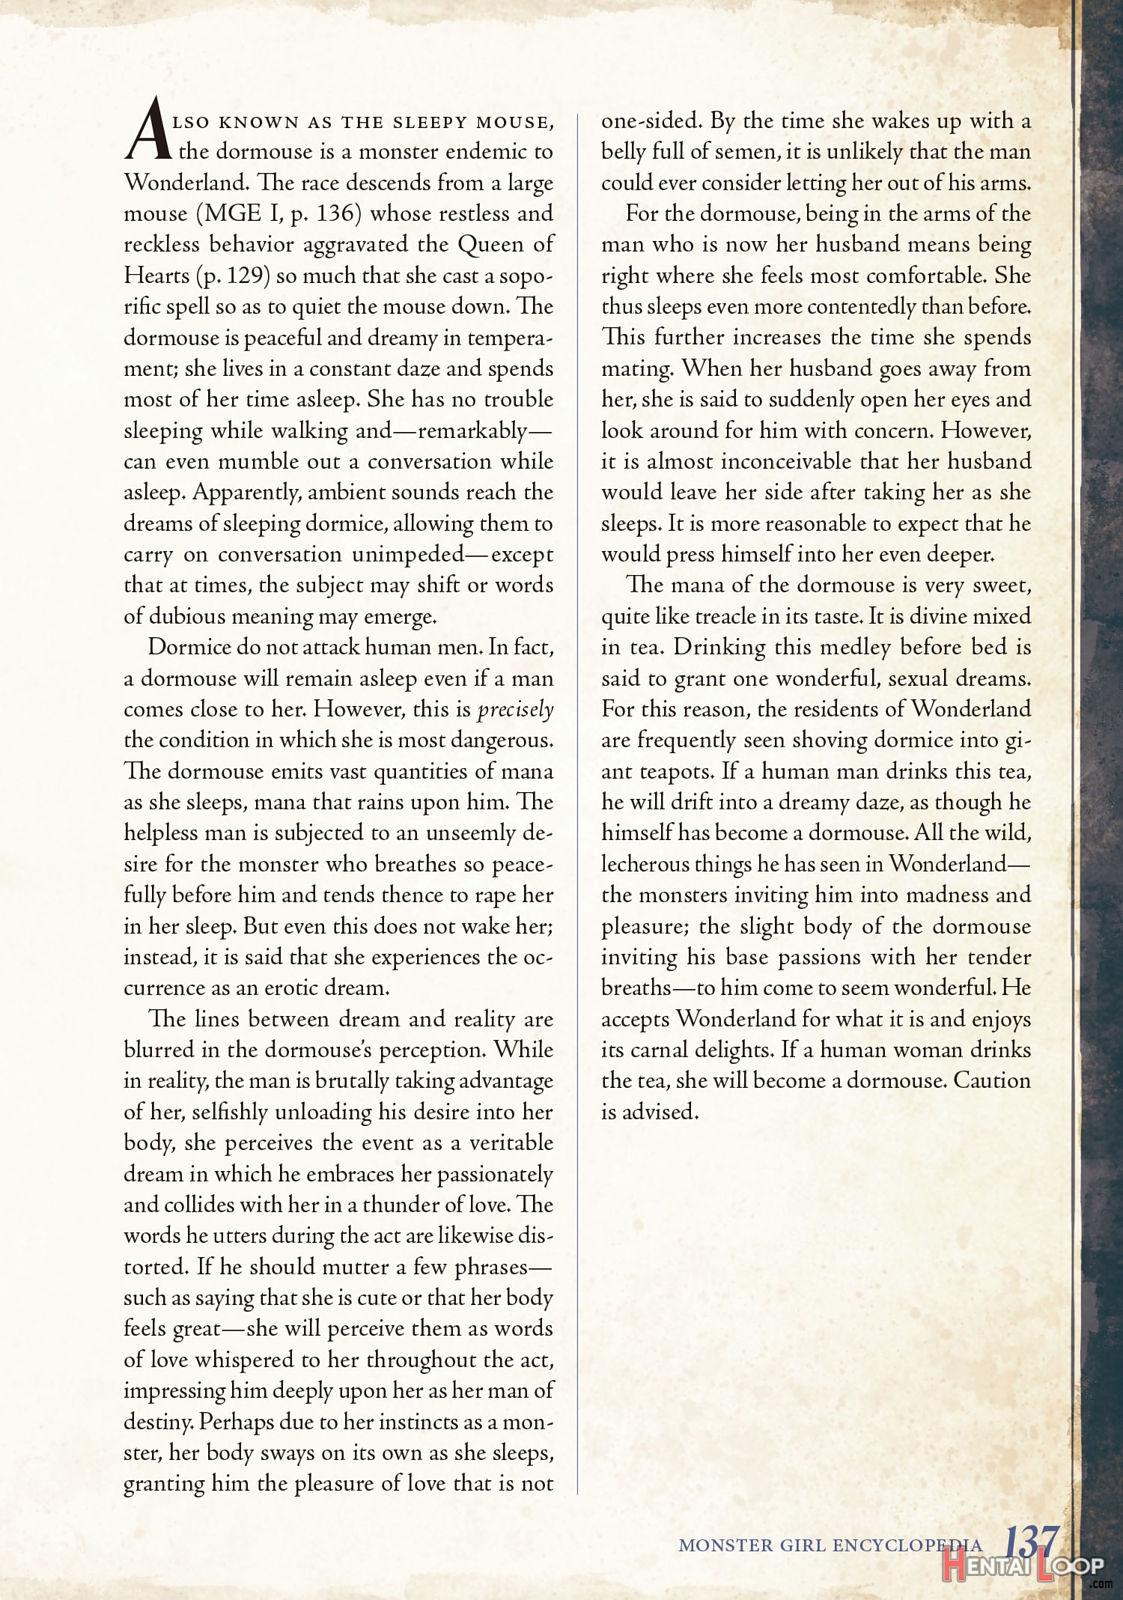 Monster Girl Encyclopedia Vol. 2 page 138